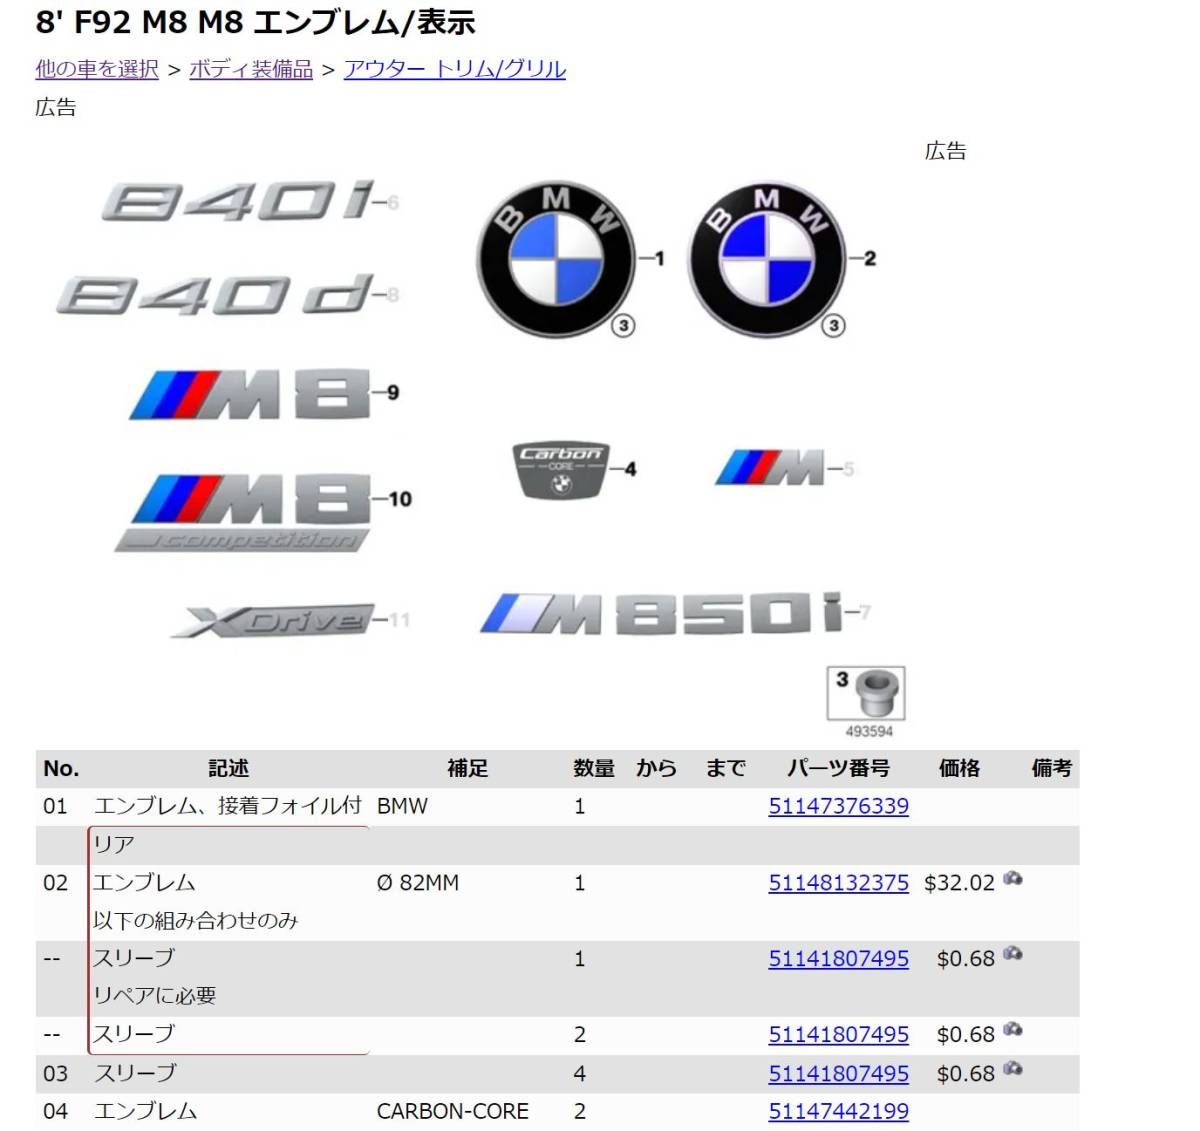 BMW ETK parts list Japanese correspondence F12 F13 E38 E65 E66 E67 F01 F02 F03 F04 F49 E21 E30 E36 E12 Isseta 2002 E28 E34